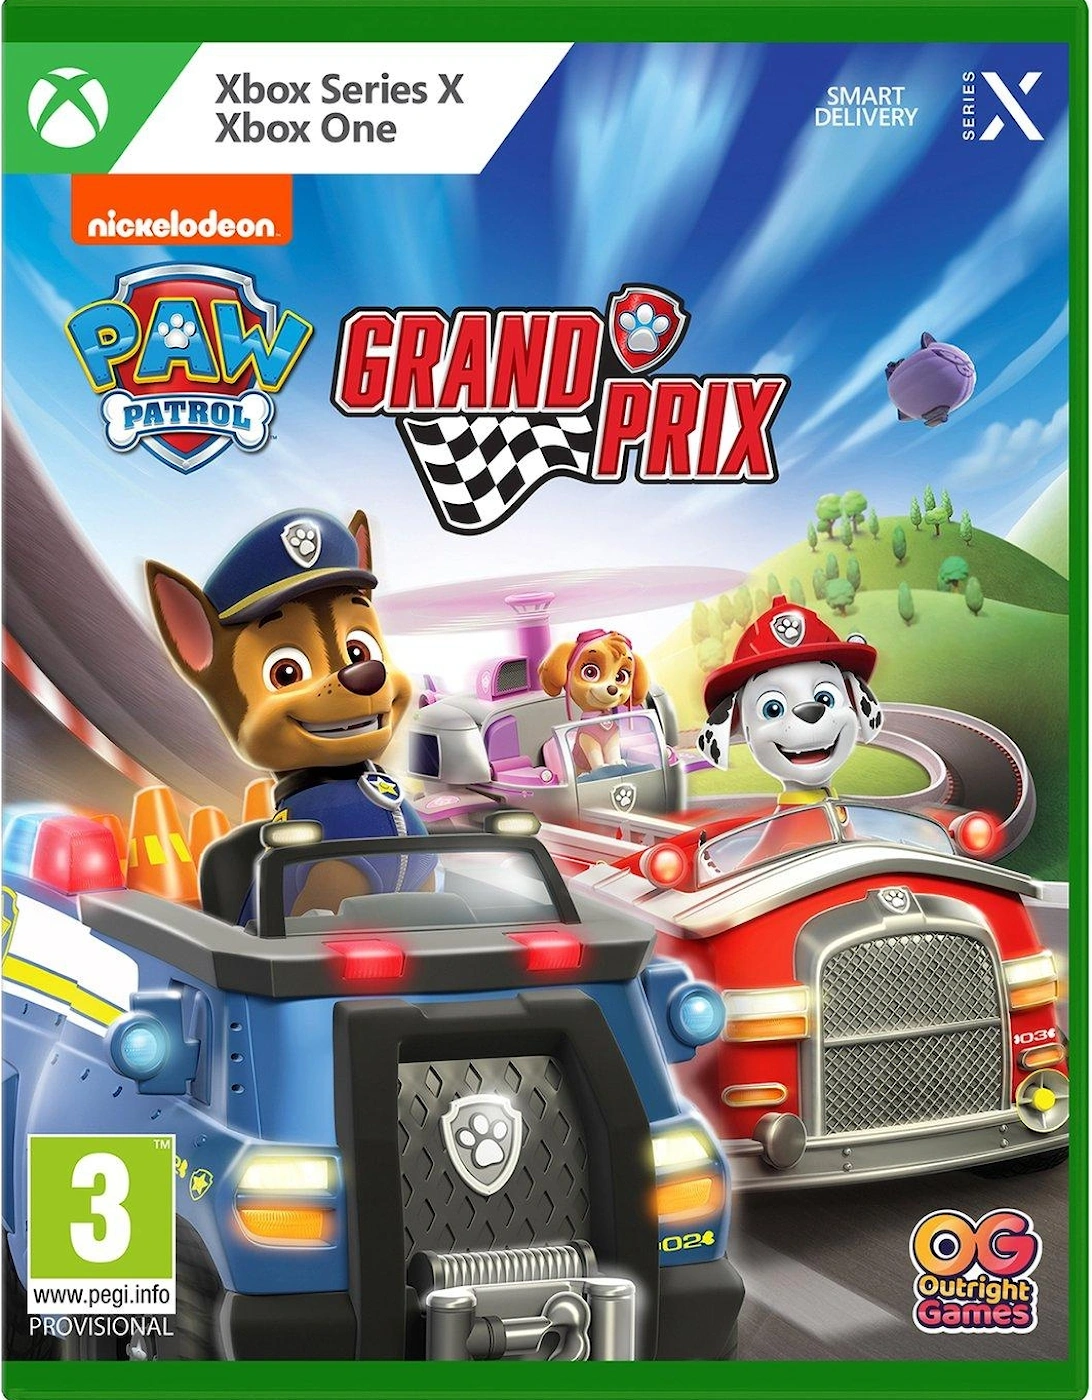 Xbox Paw Patrol Grand Prix, 3 of 2